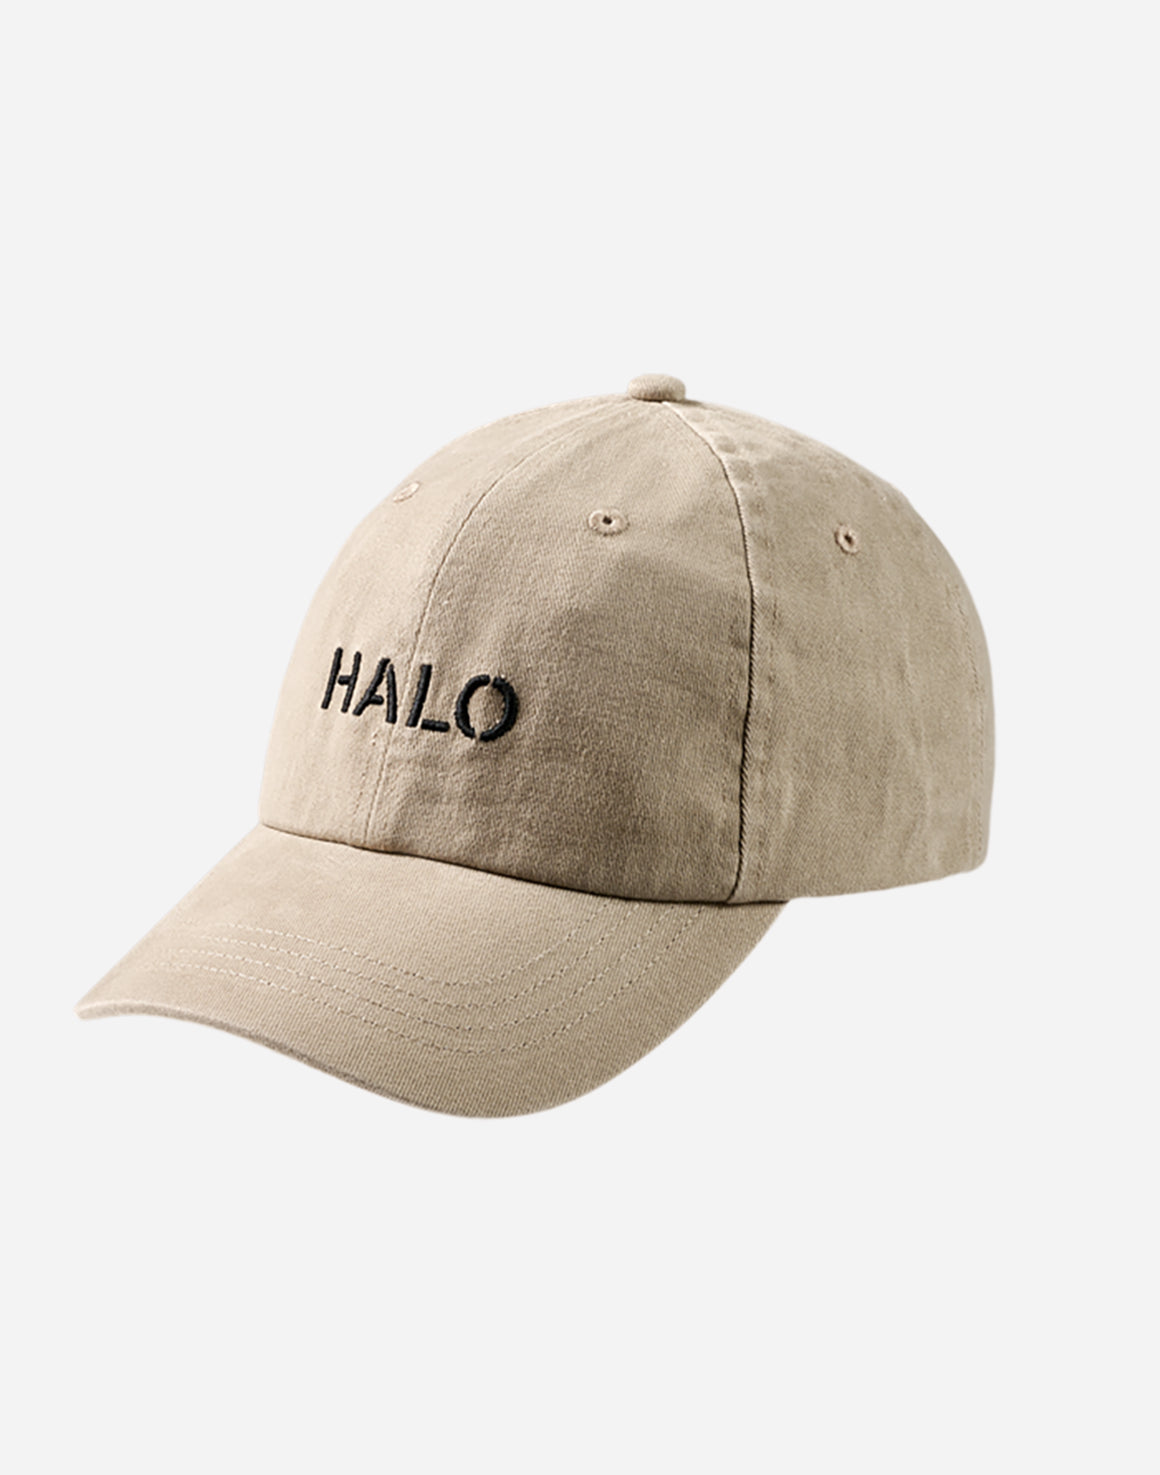 Halo Cotton Cap - Sand - HALO - Kul og Koks